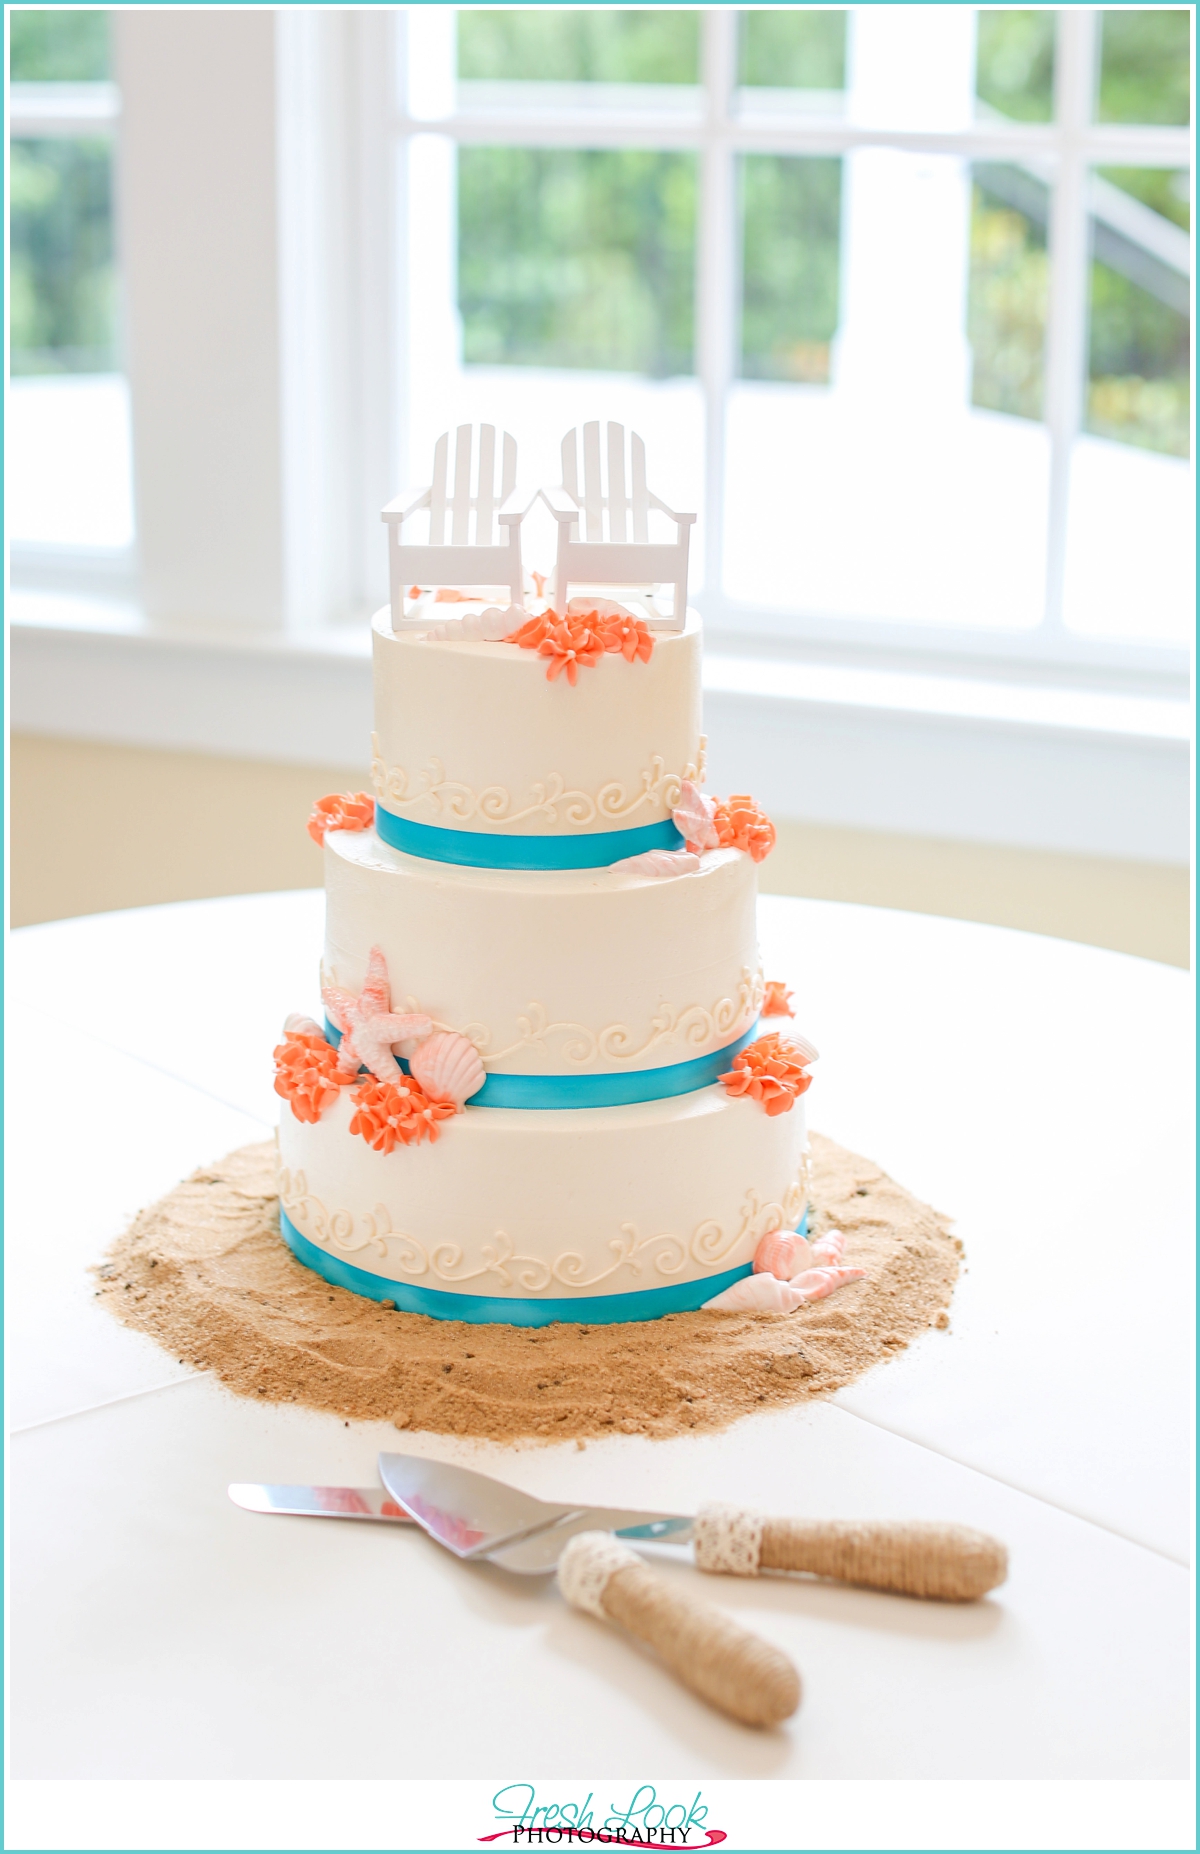 Shockley's Sweet Shop wedding cake